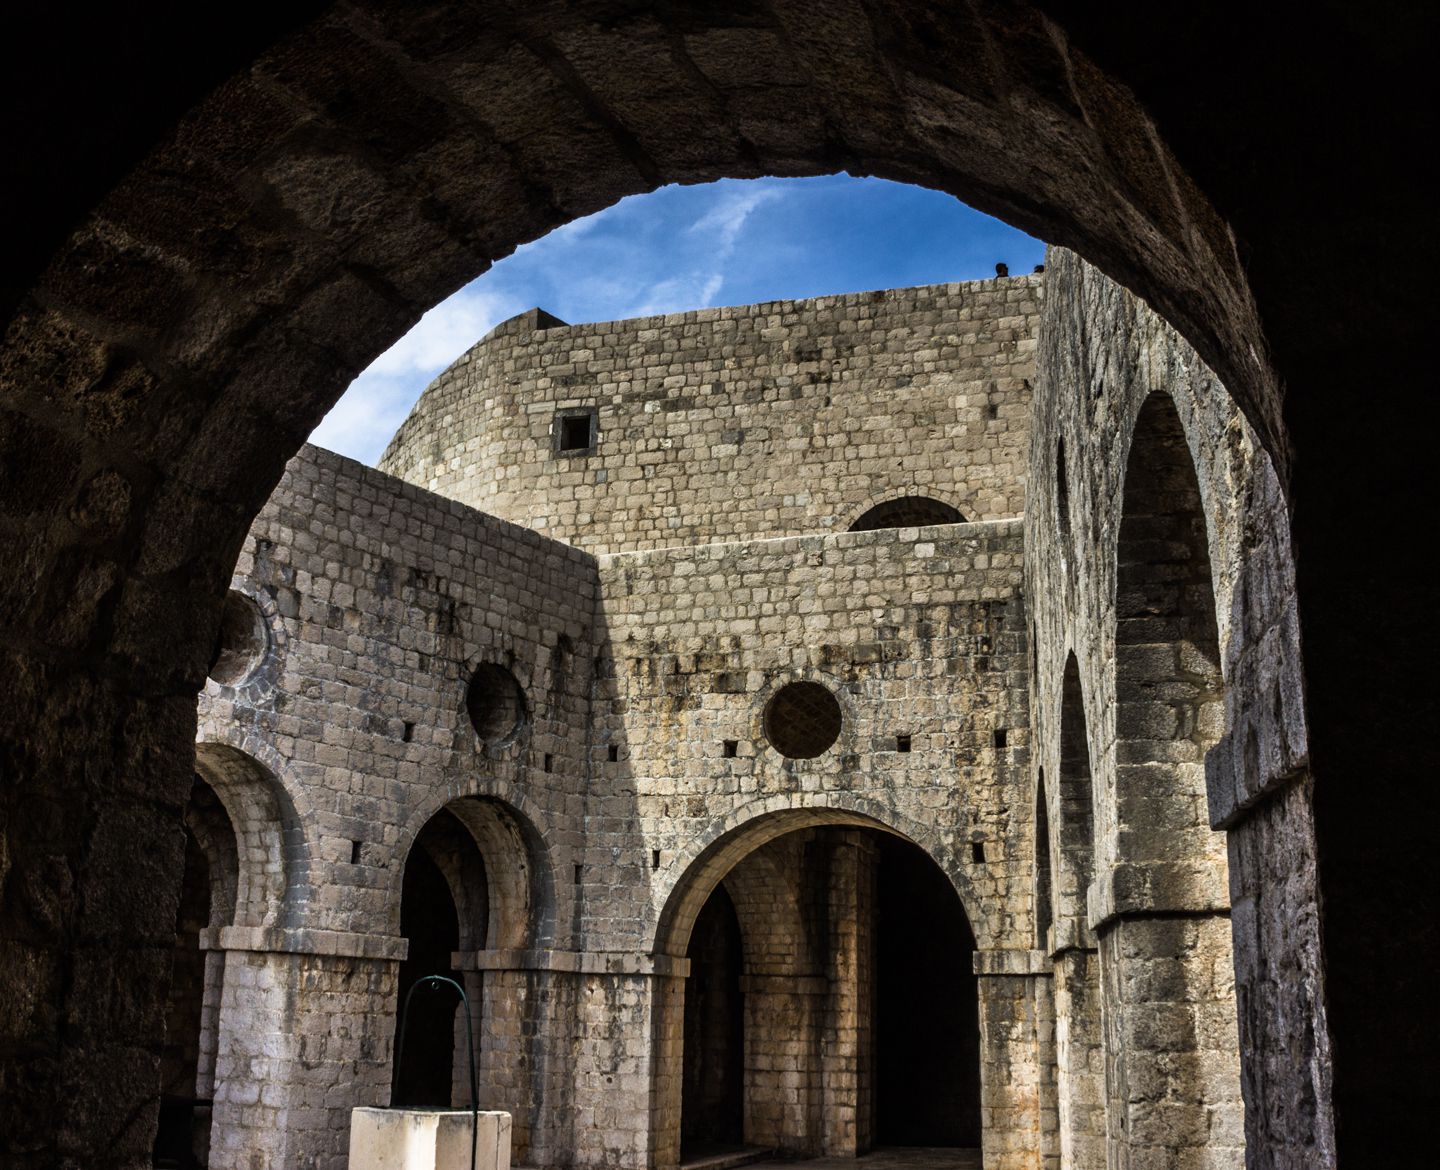 Inside Fort Lovrijenac, Dubrovnik, Croatia